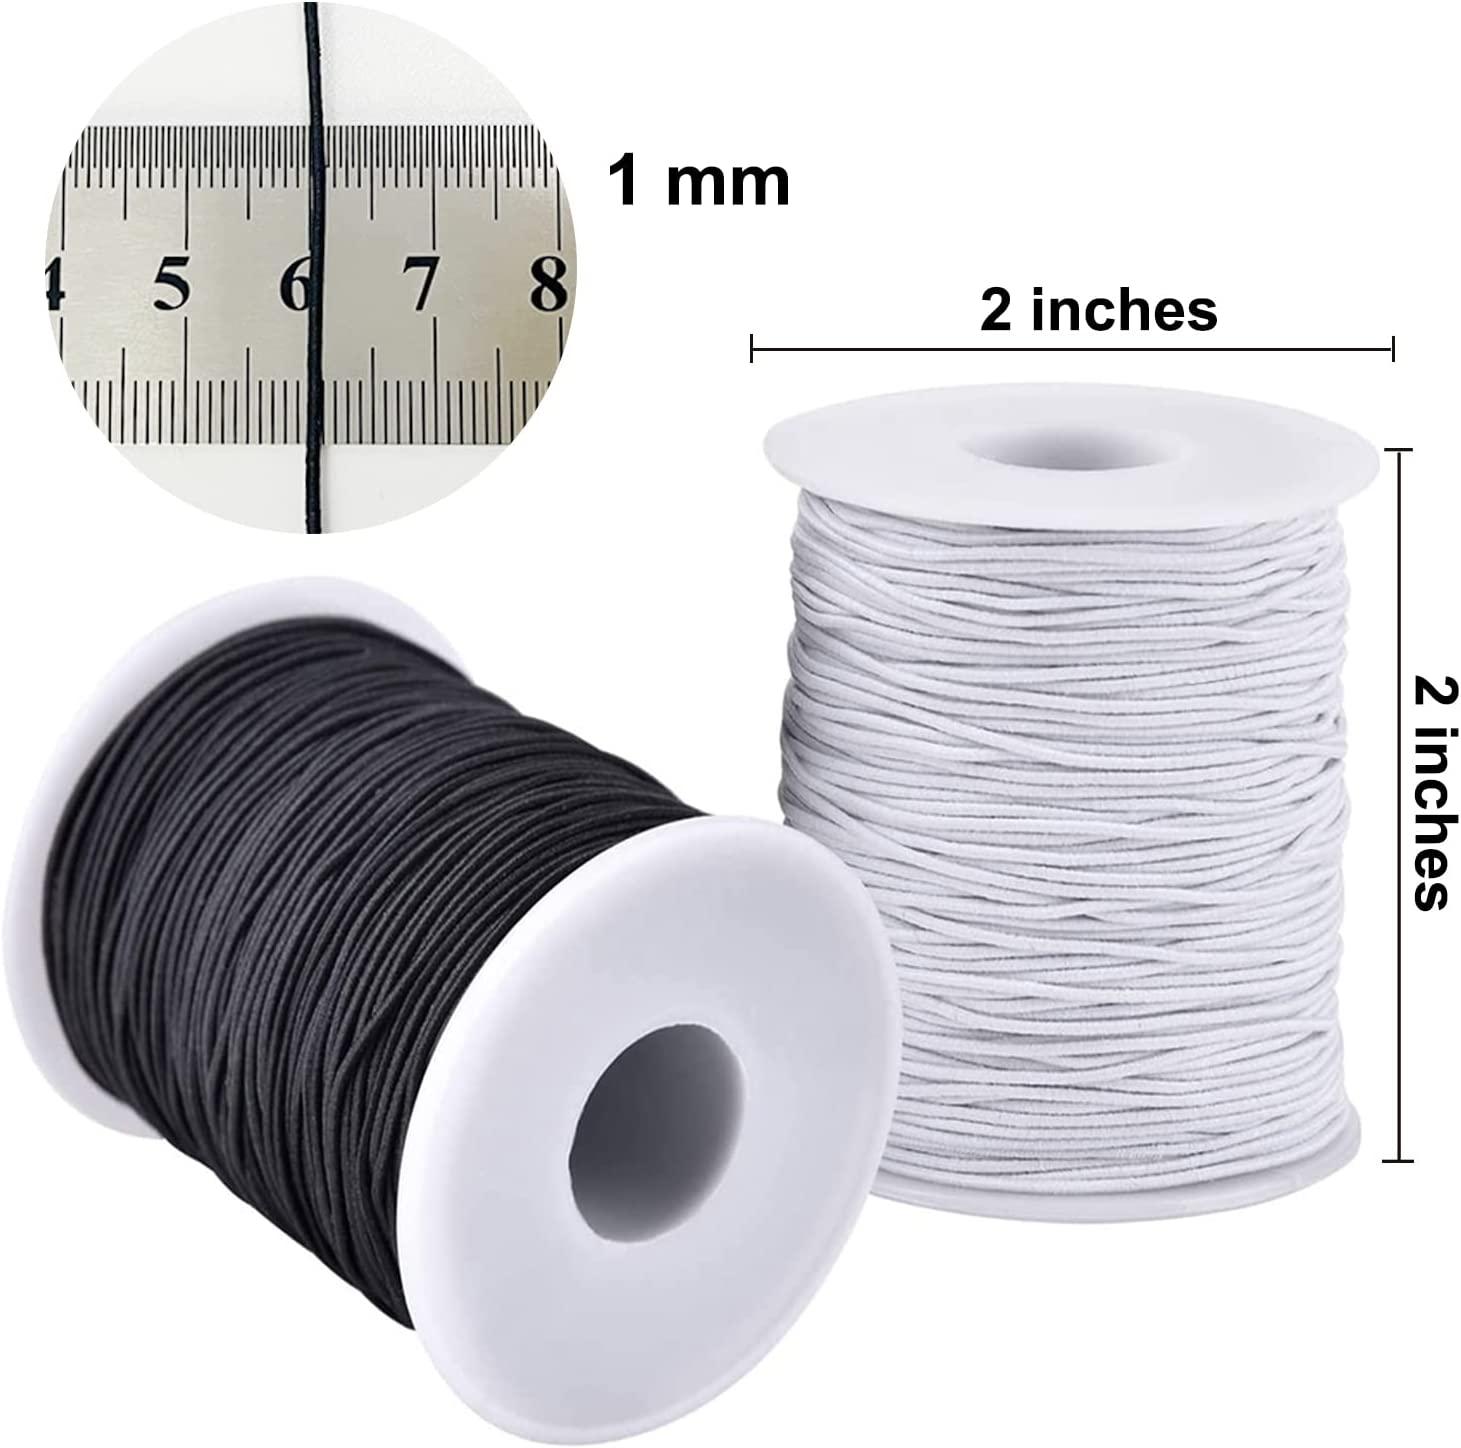 5 Rolls Nylon Thread Cords 1mm For Jewelry Making Diy Bracelet